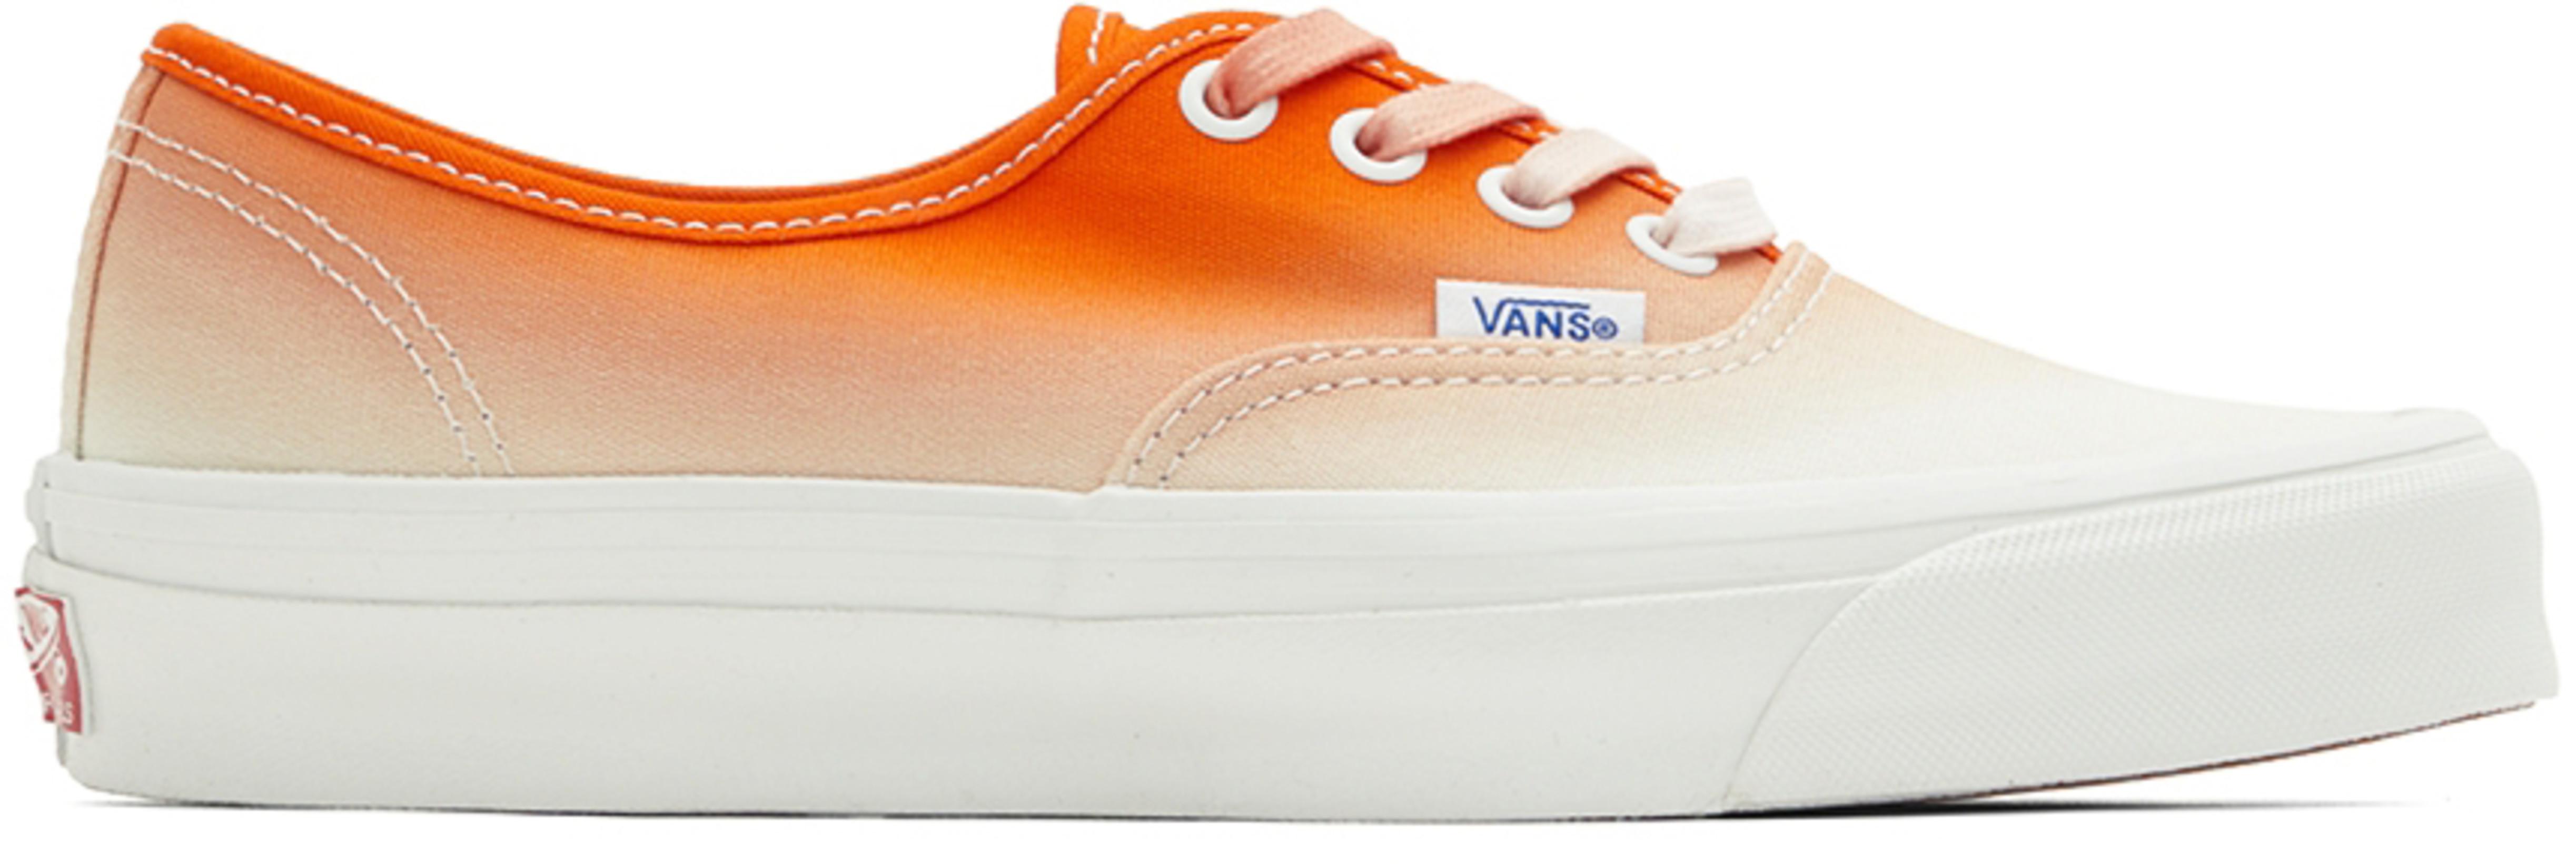 Orange & White OG Authentic L Sneakers by VANS